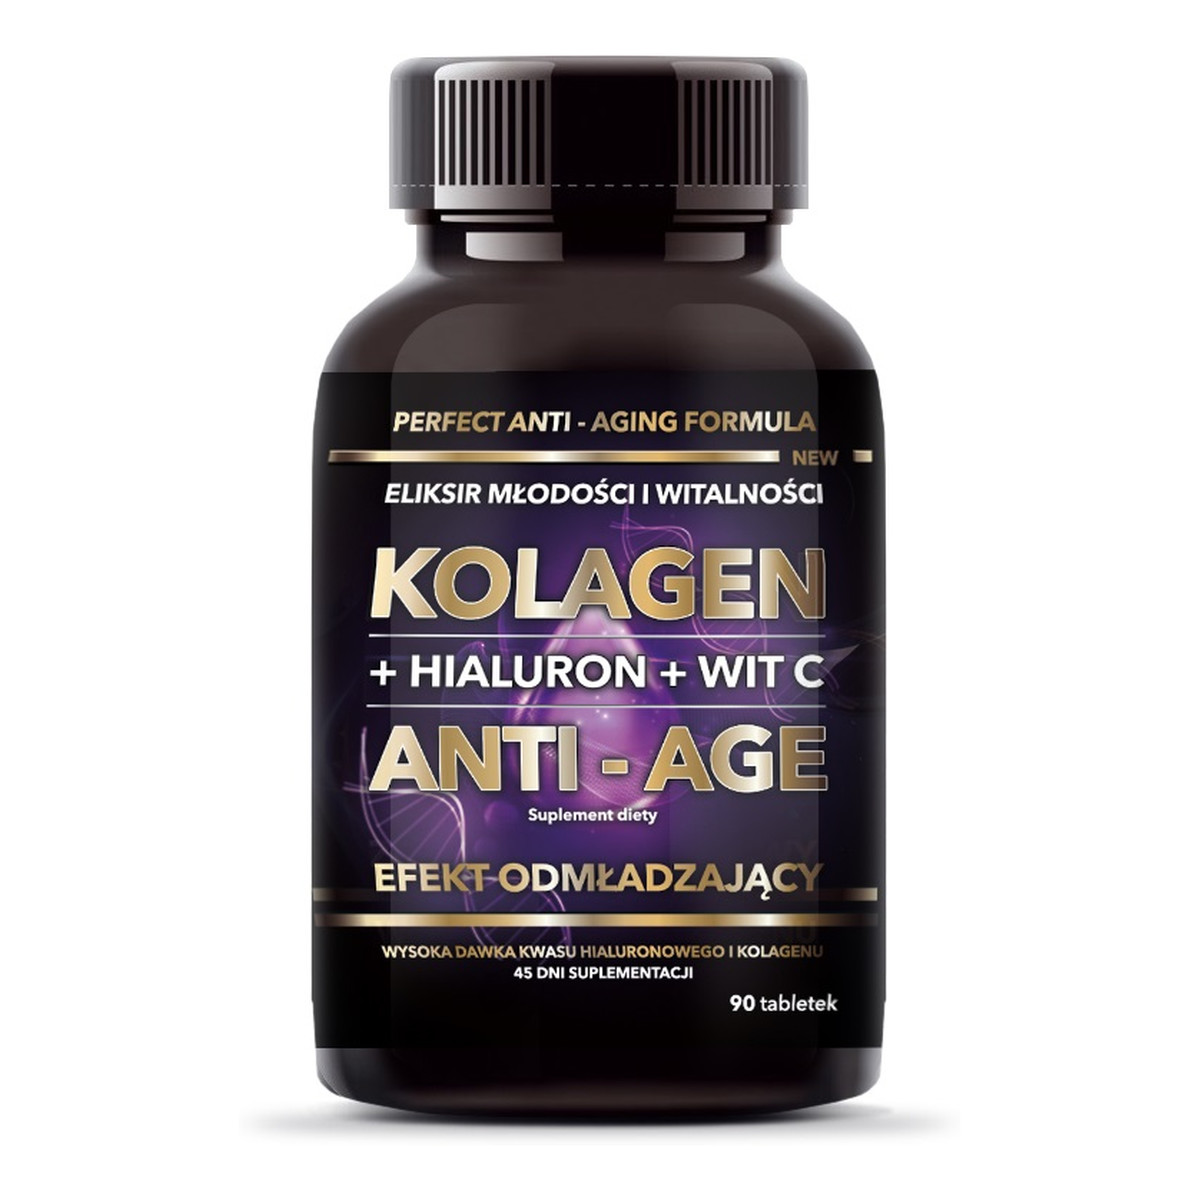 Intenson Kolagen + hialuron + witamina c anti-age suplement diety 90 tabletek